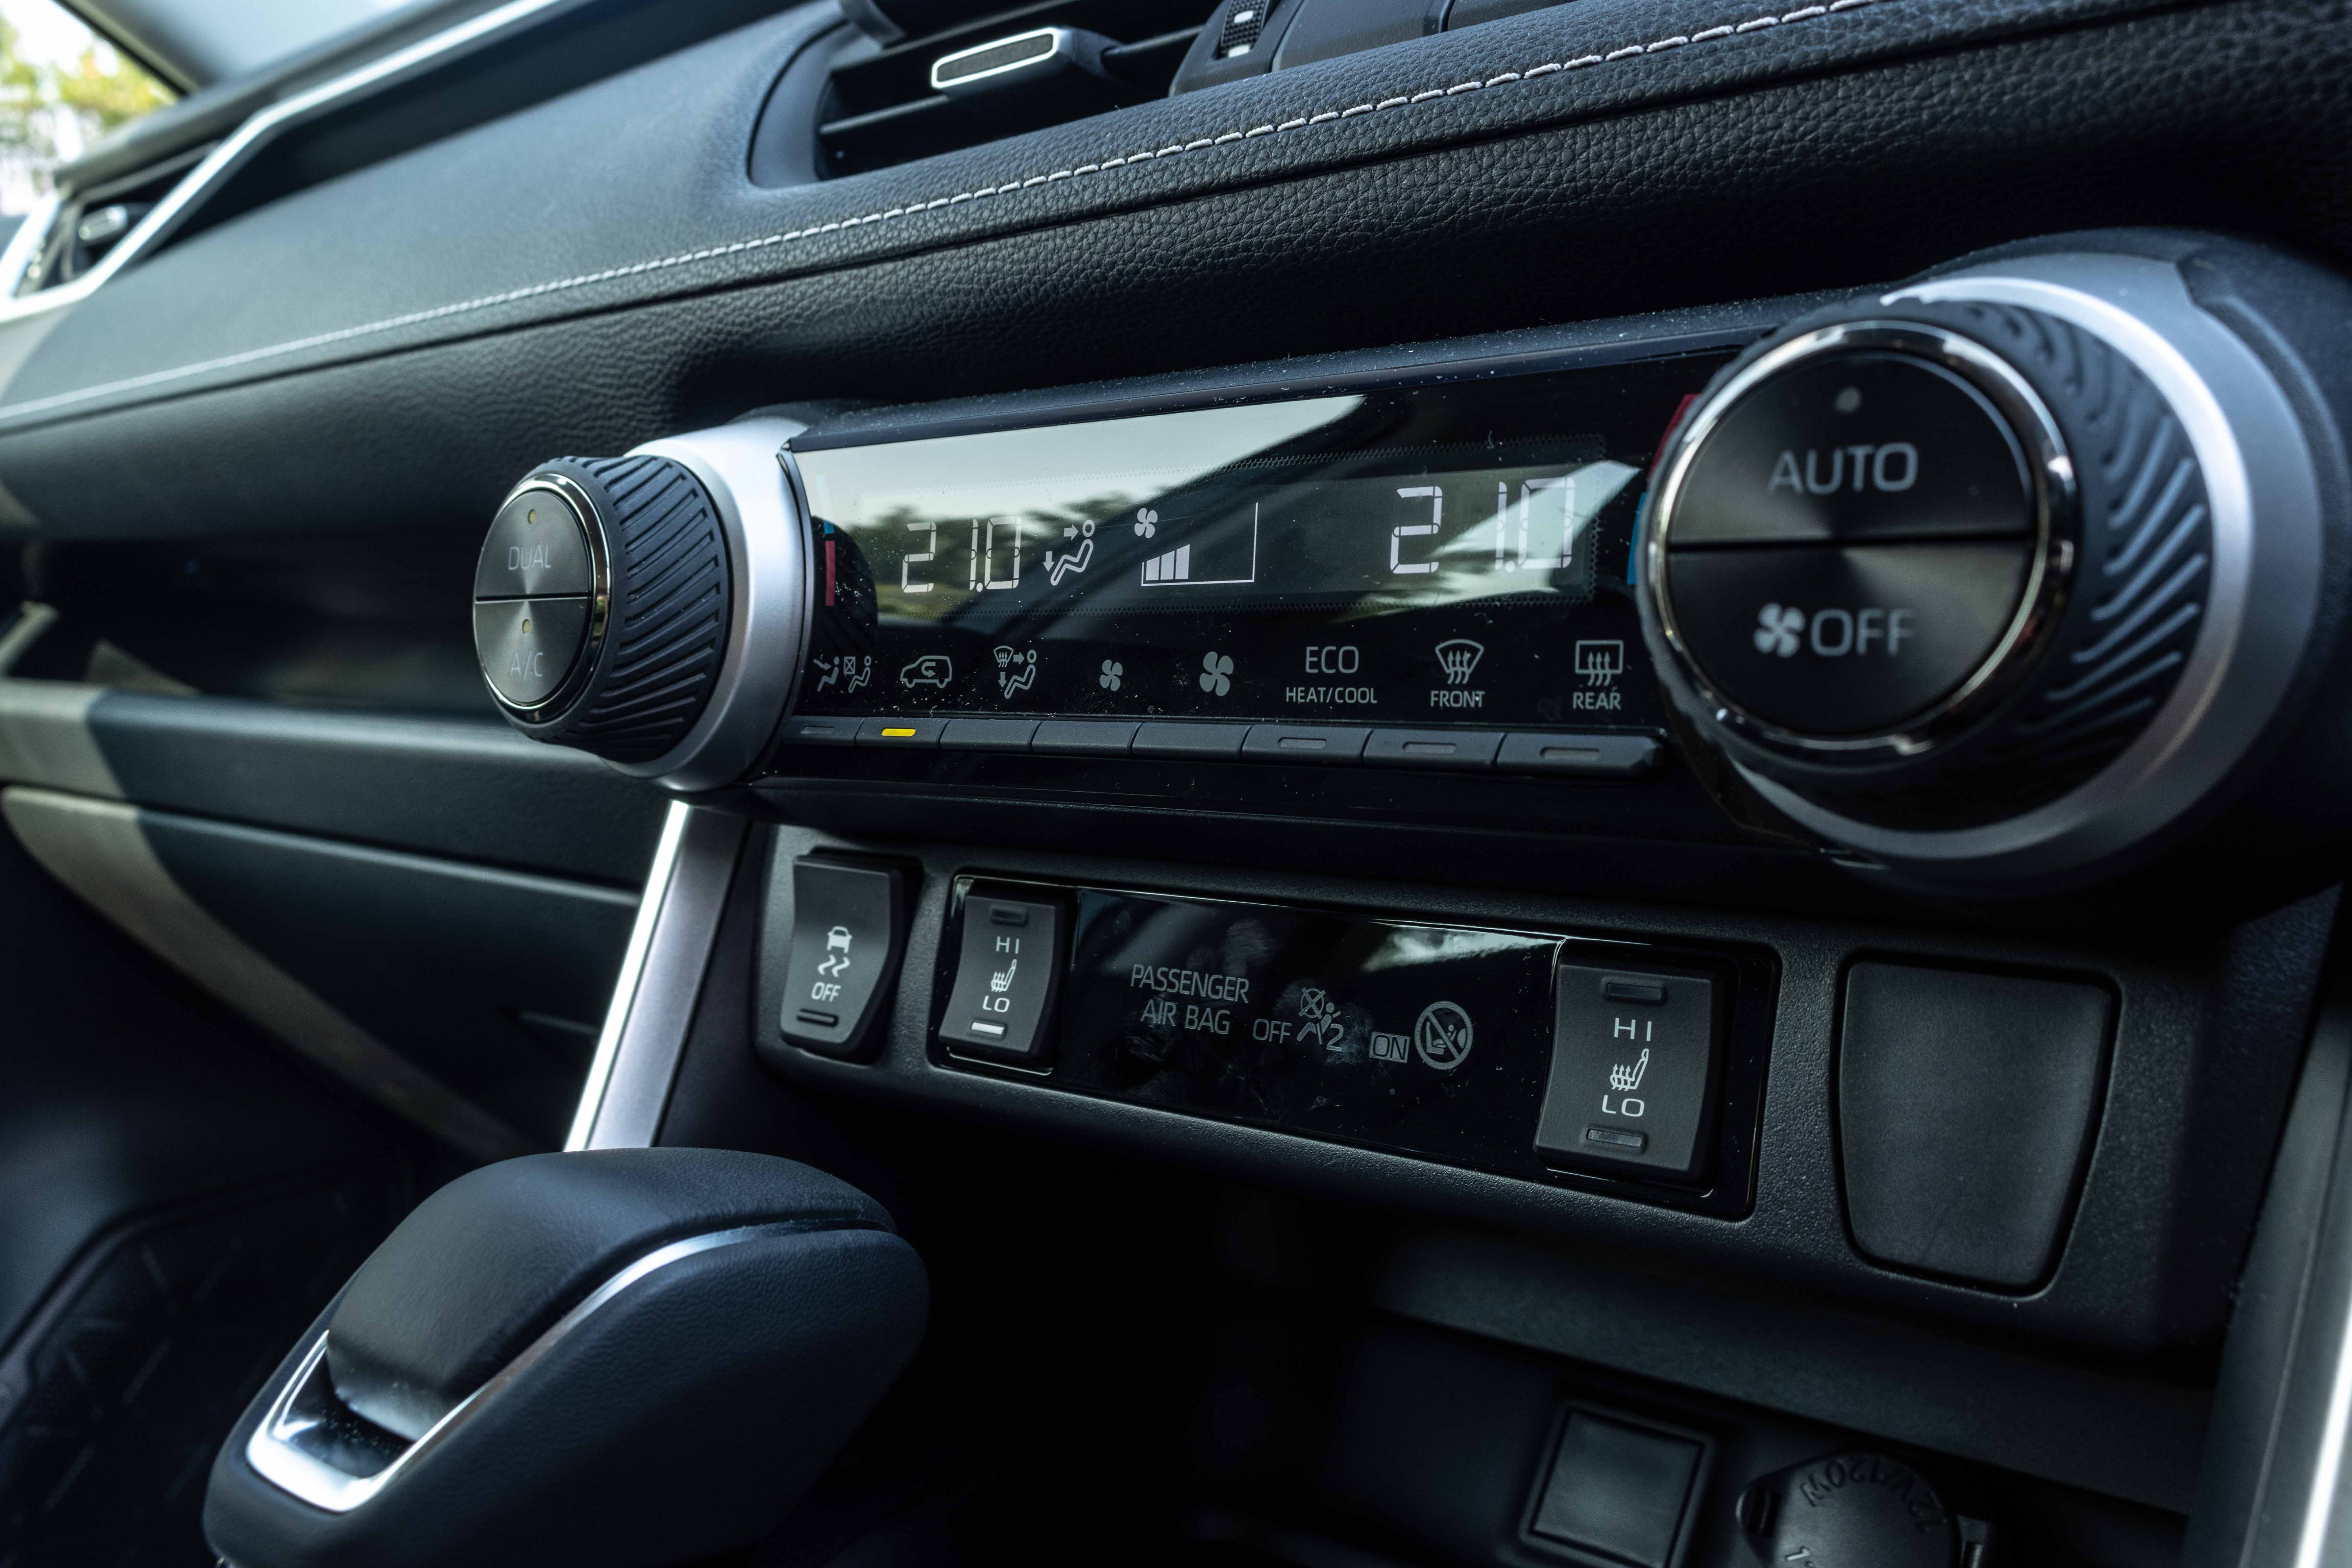 2022 Toyota RAV4 Hybrid Singapore - Air-conditioning controls